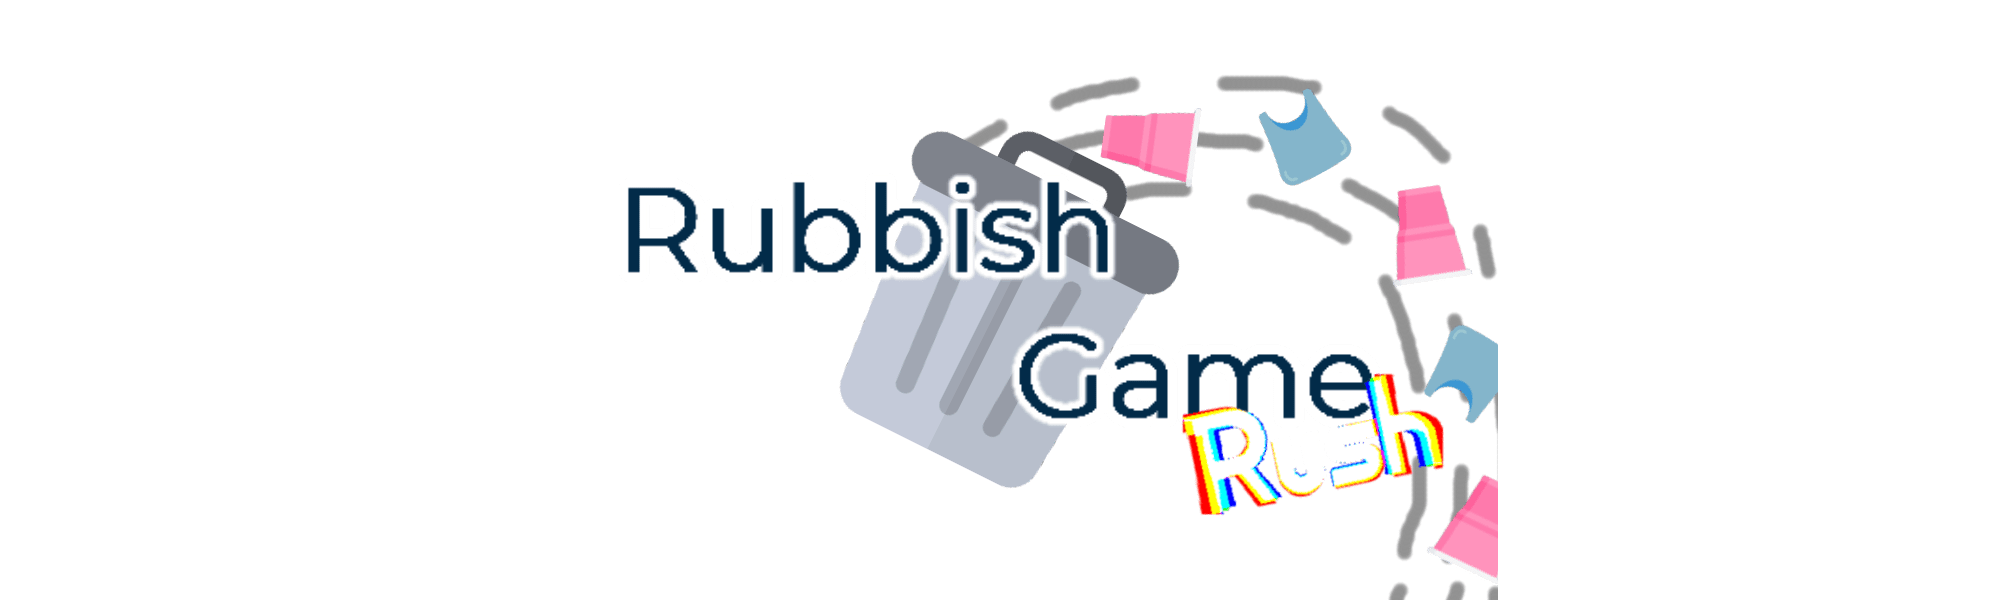 Rubbish Game Rush